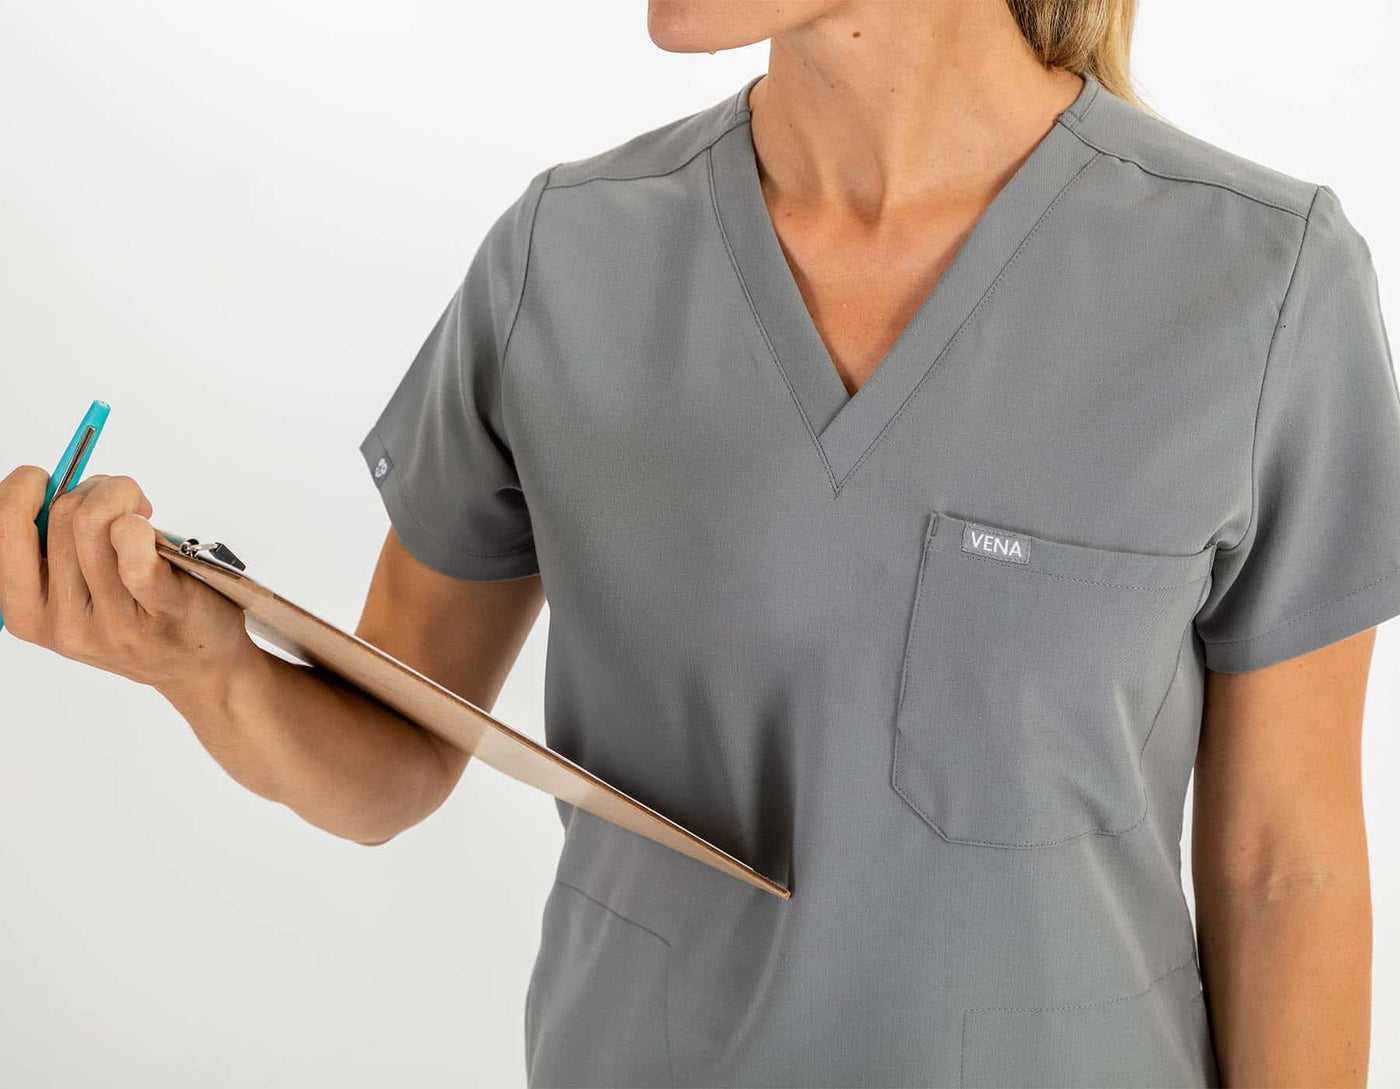 VENA ladies jogger style scrub shirt  zoom image of scrub shirt lady holding checklist in hand#colour_grey